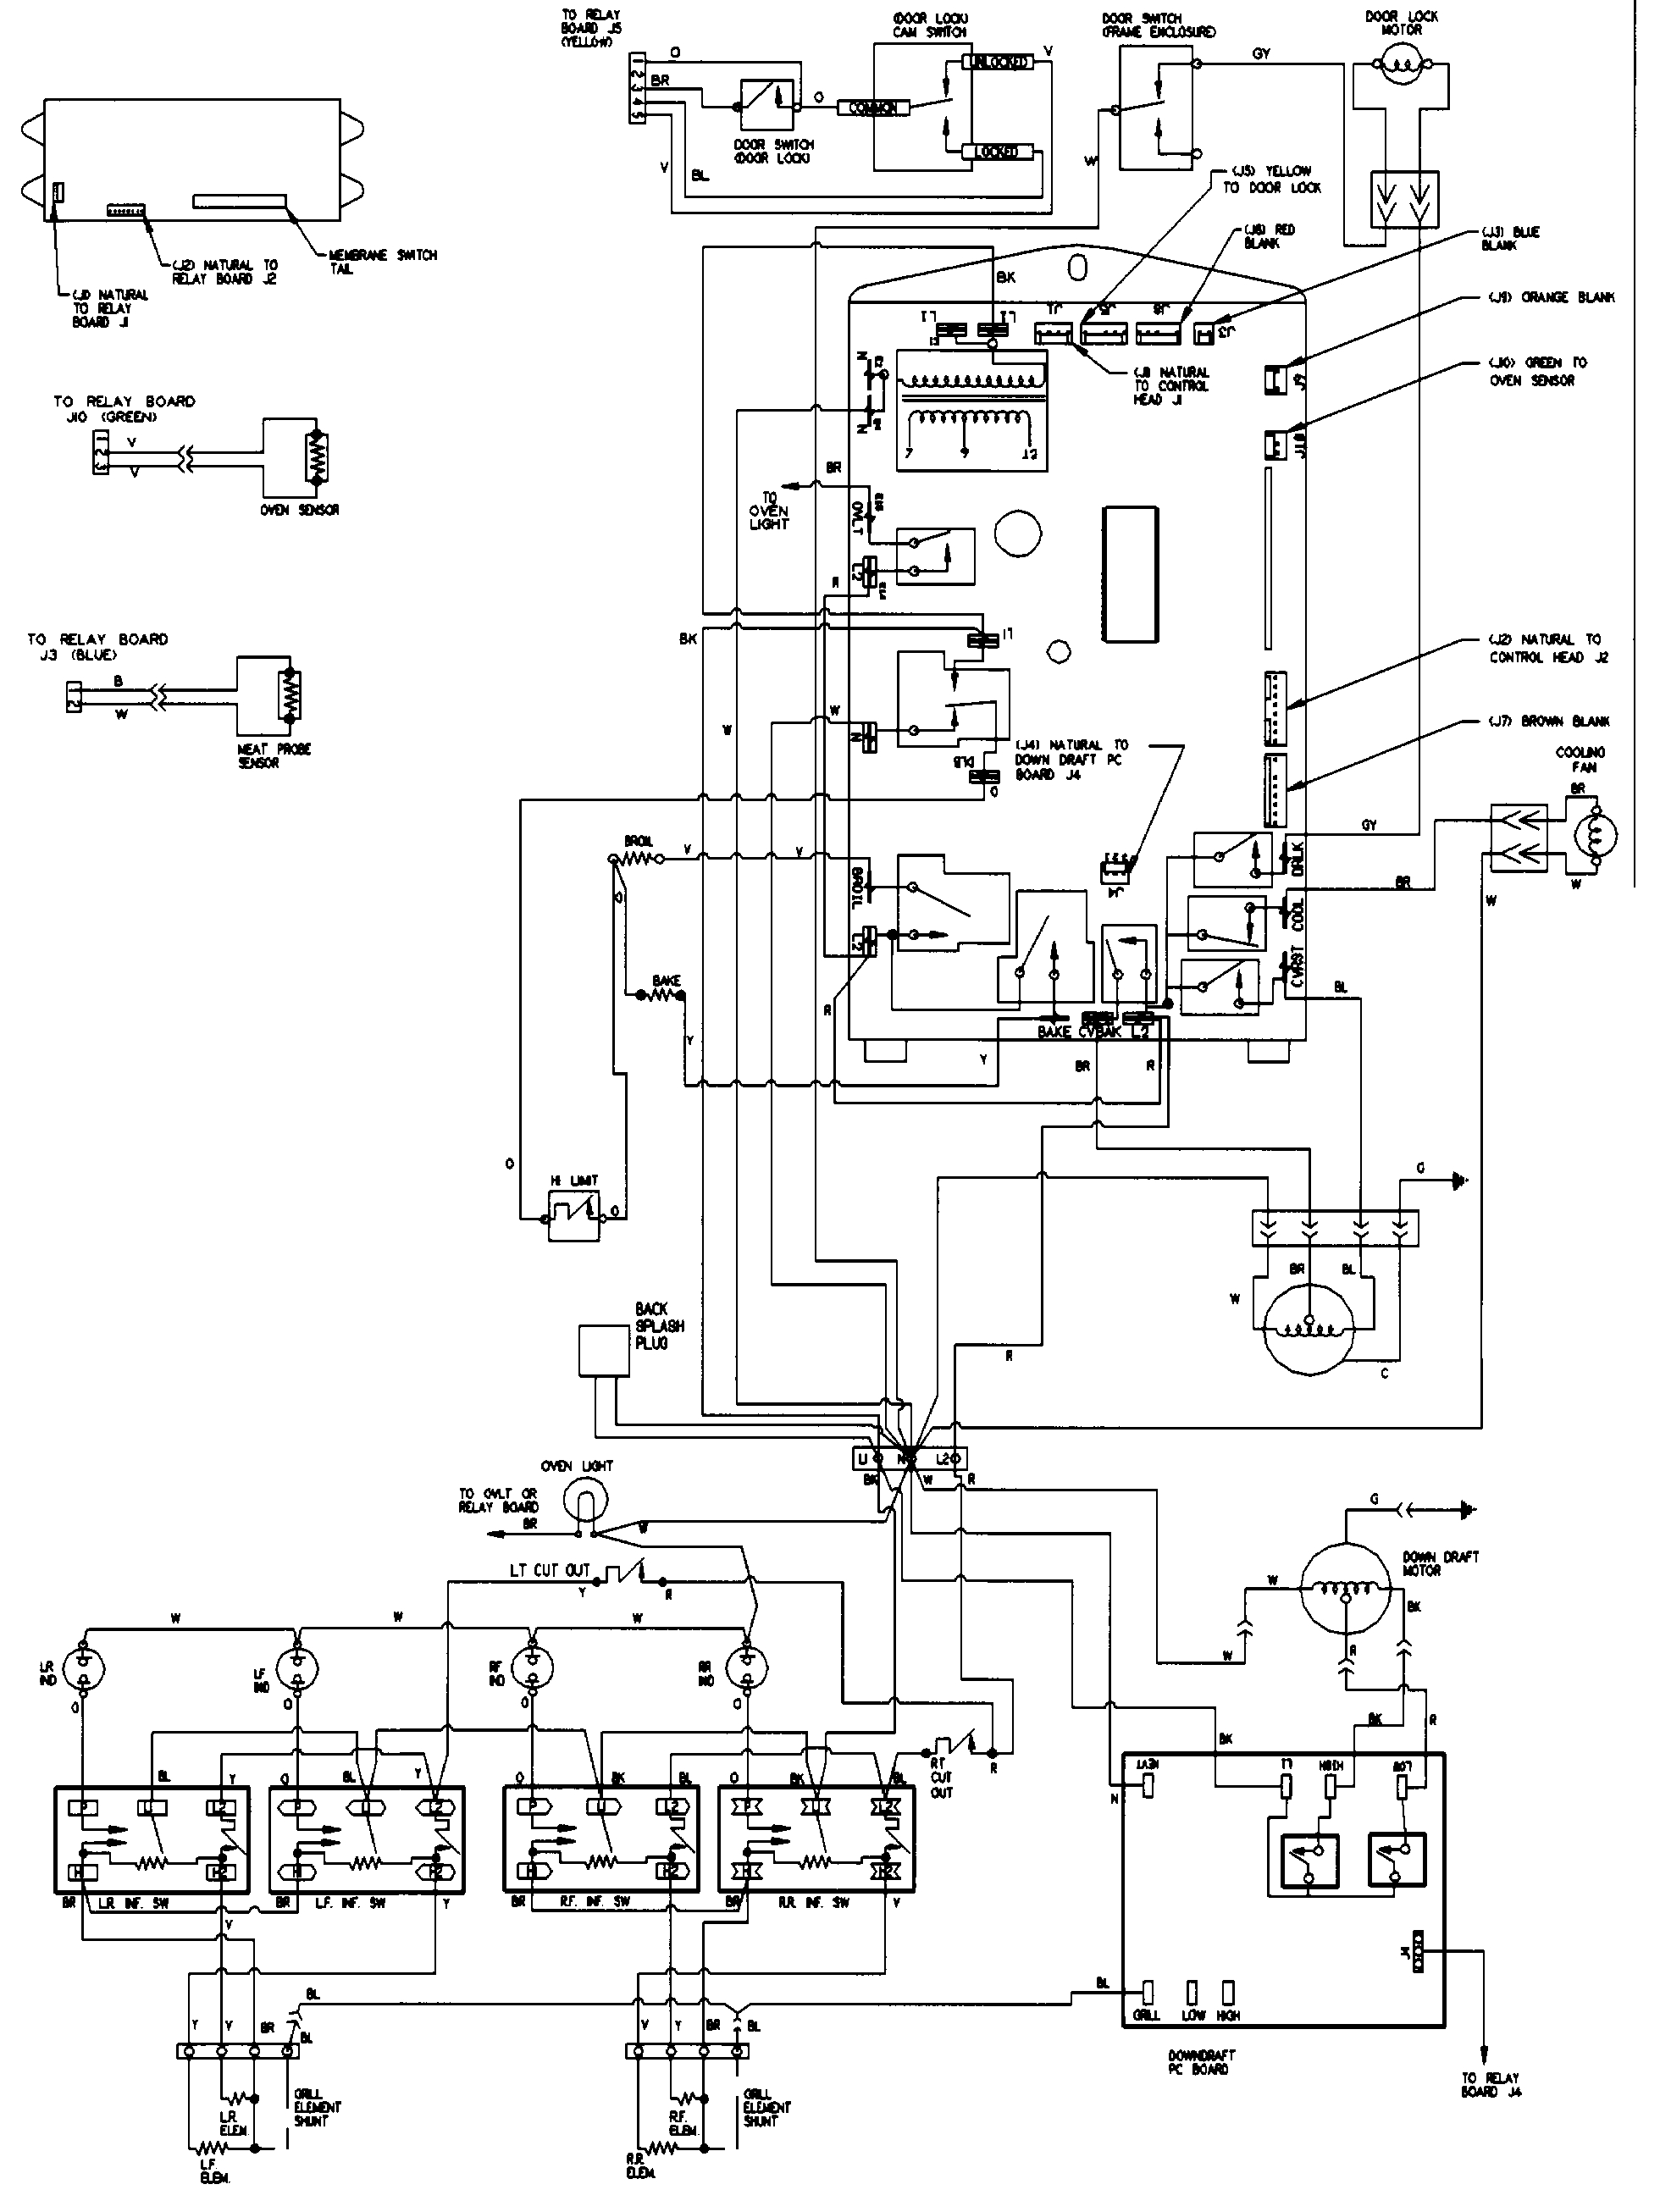 Kitchenaid Gas Grill Ignitor Wiring Diagram | Wiring Diagram - Grill Ignitor Wiring Diagram